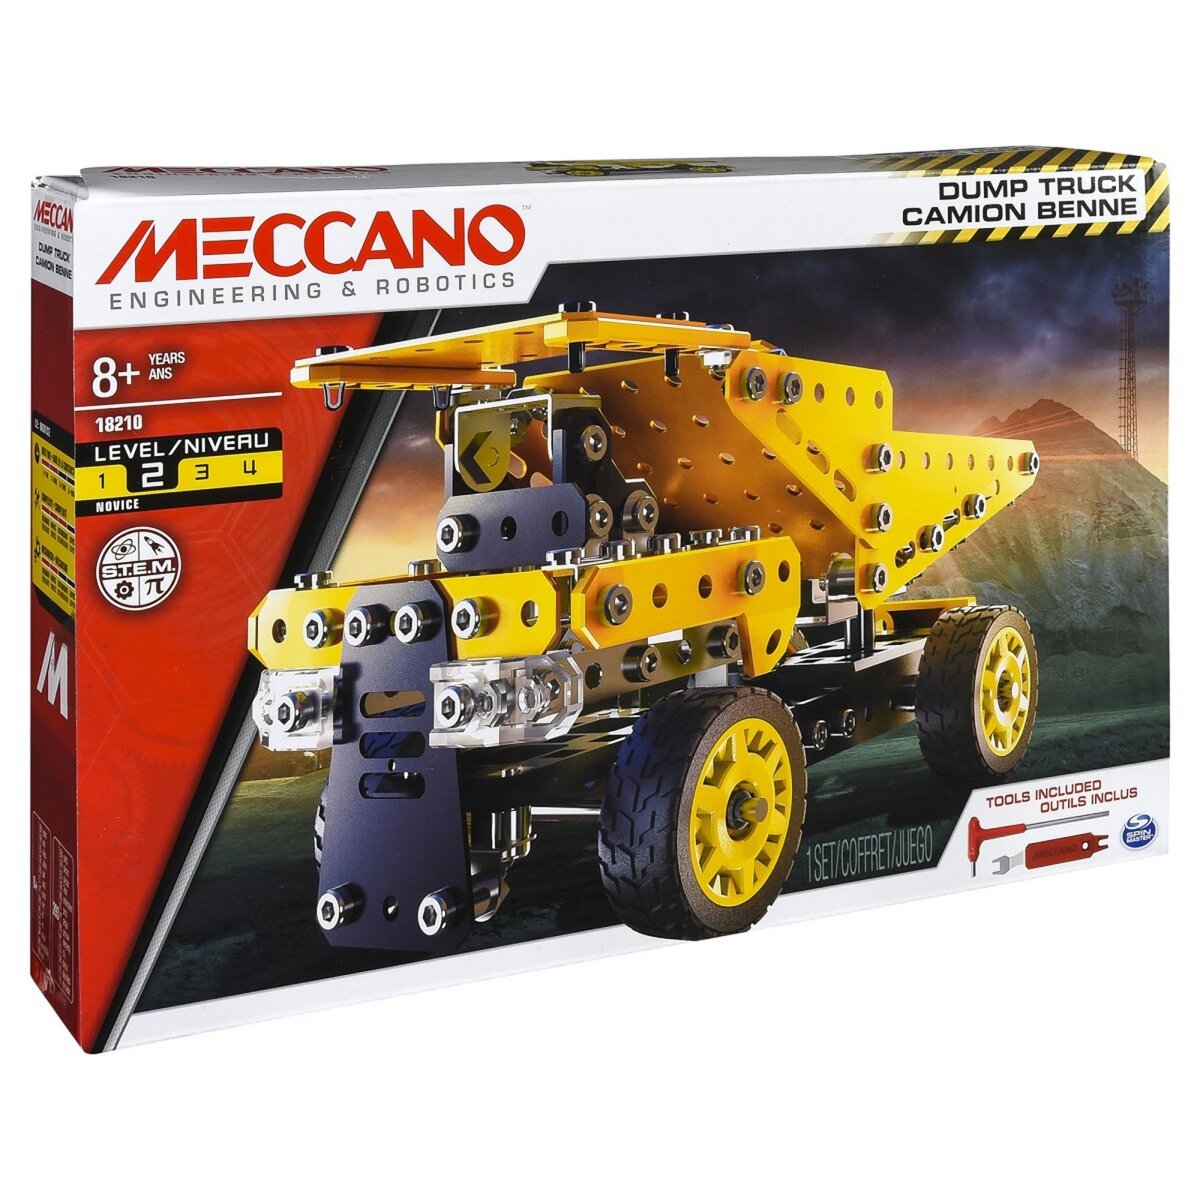 MECCANO Meccano camion benne thème chantier 